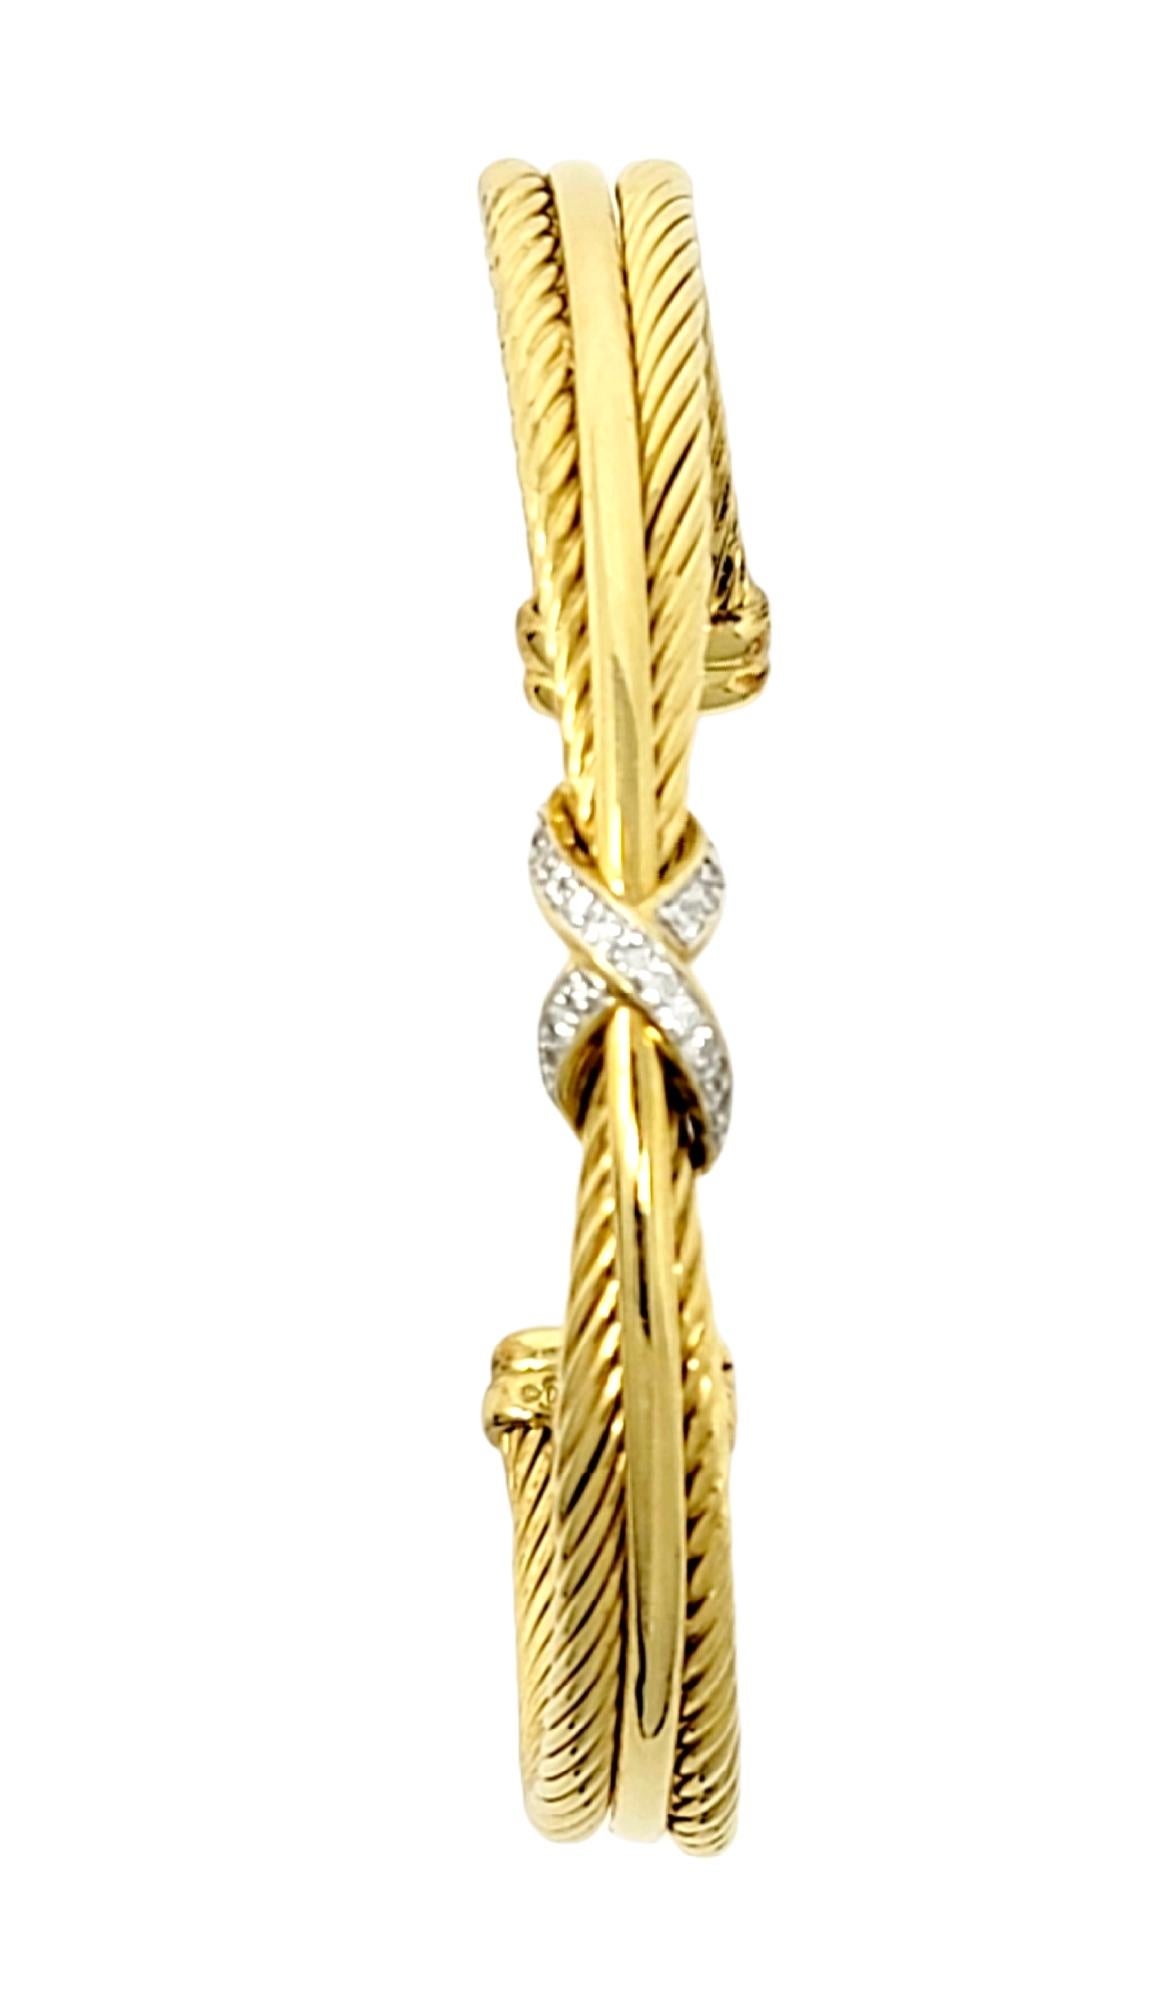 Round Cut David Yurman Diamond Crossover X Cable Cuff Bracelet in 18 Karat Yellow Gold For Sale